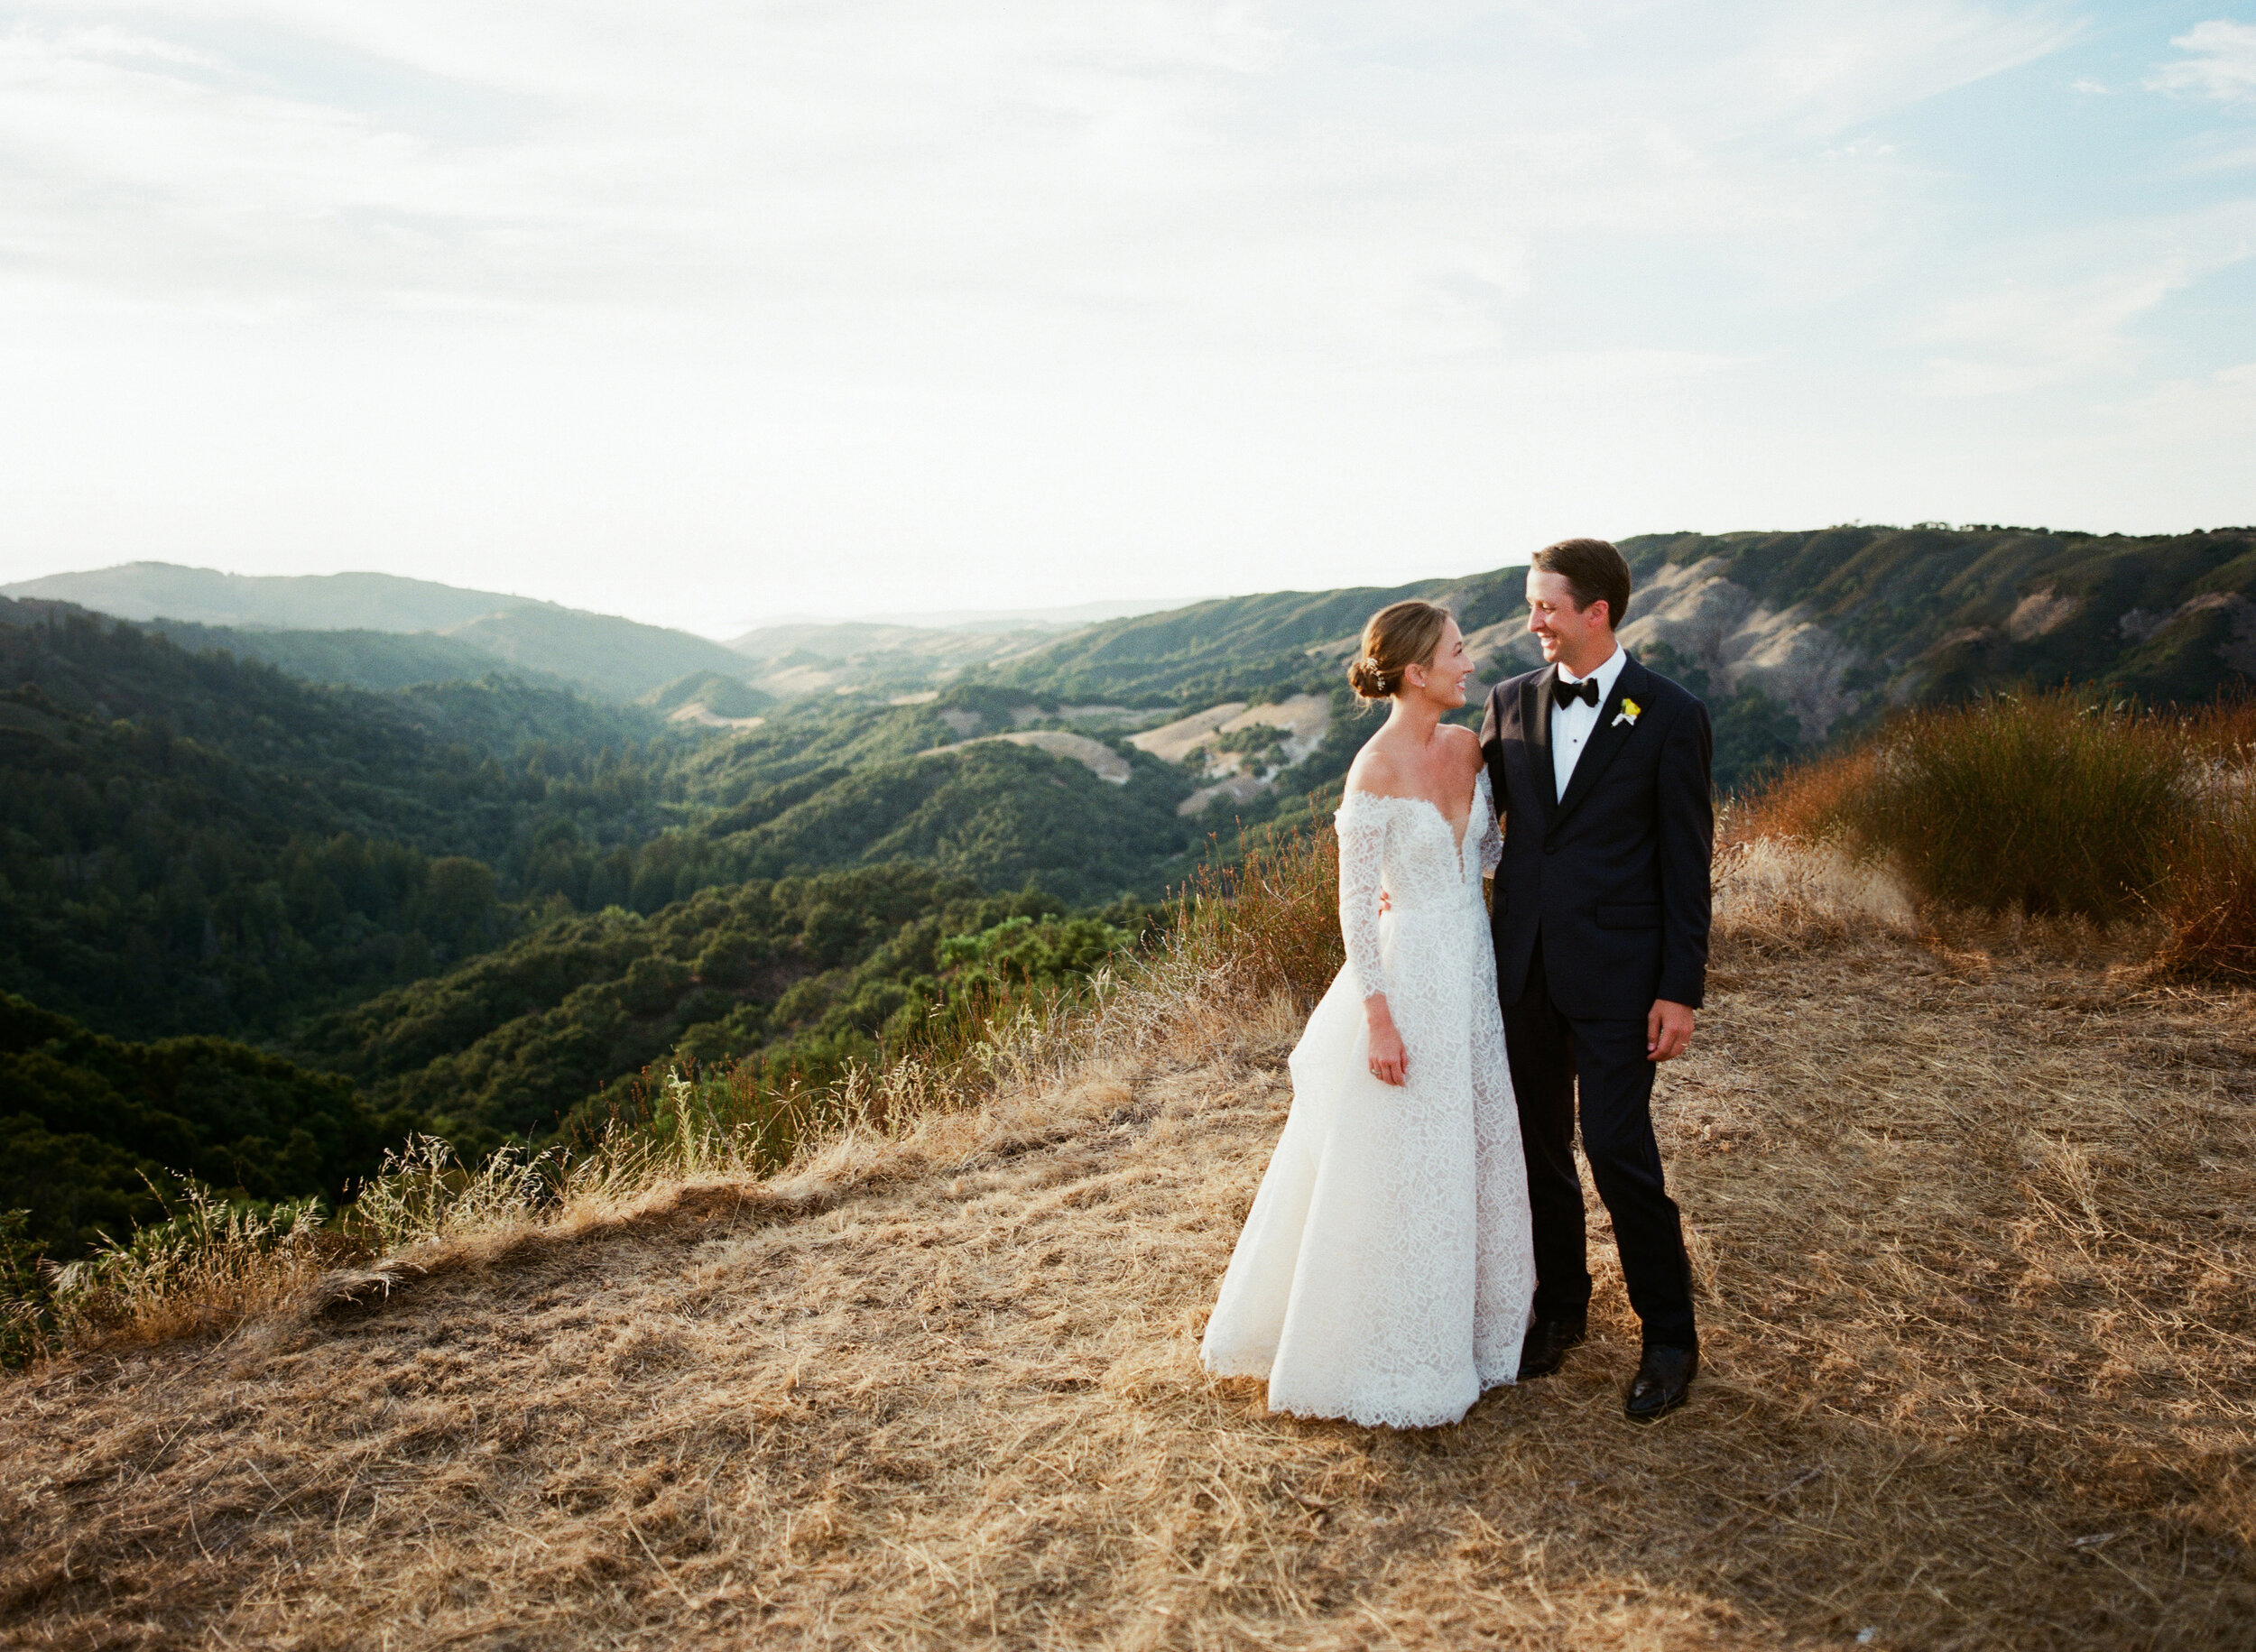 Carmel-Valley-Redwoods-Santa-Lucia-Preserve-Liz-Banfield-Photographer-California-sophisticated-outdoor-wedding 59.JPG